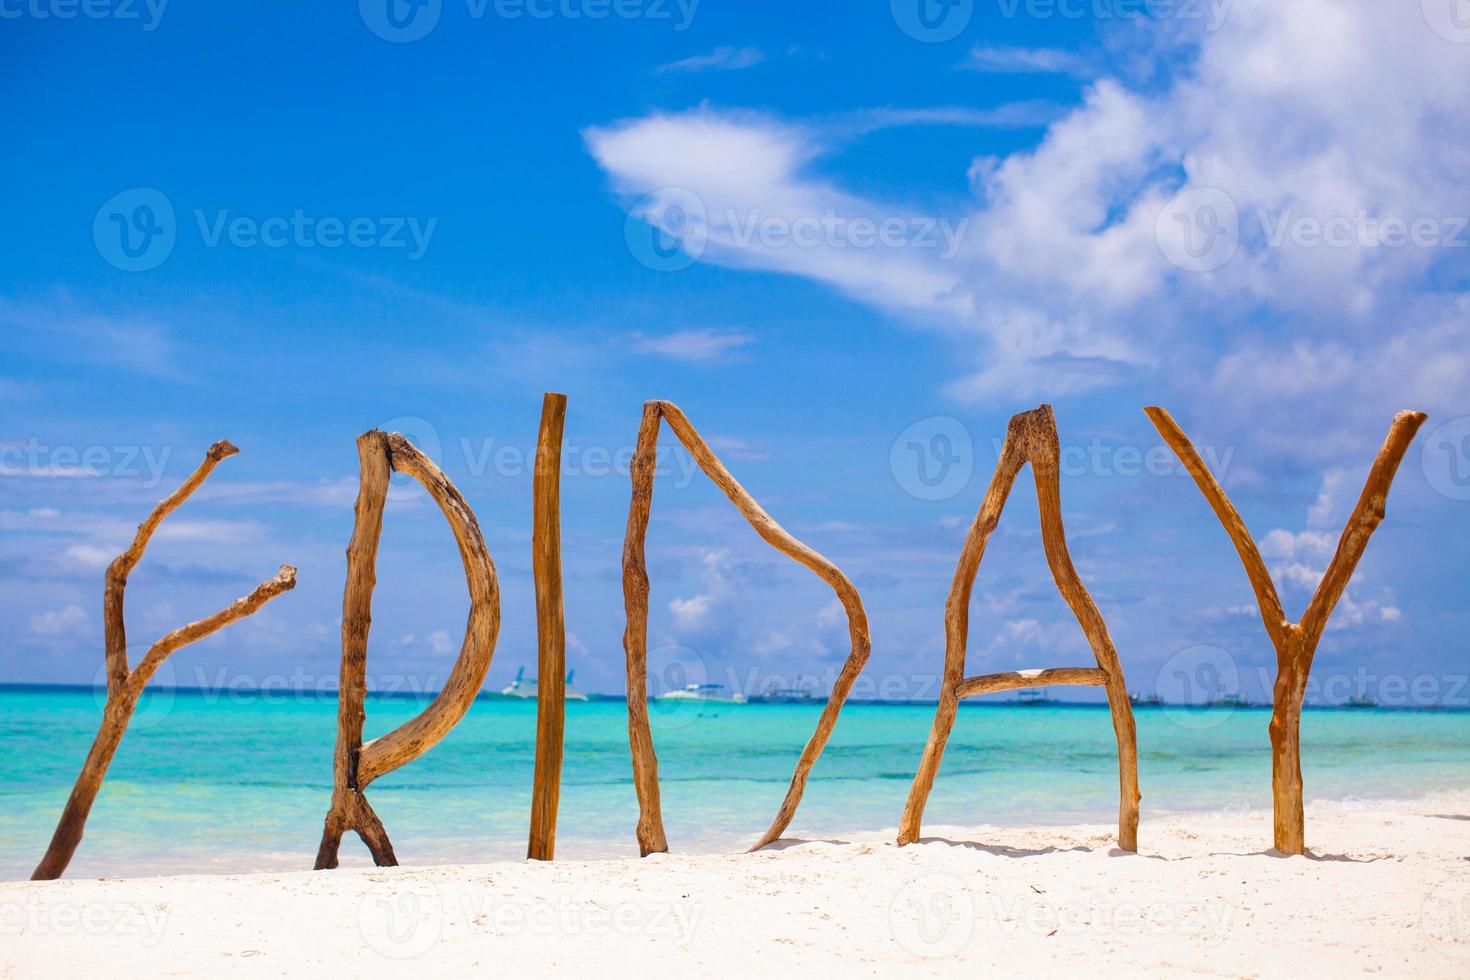 Word Friday made of wood on Boracay island background turquoise sea photo